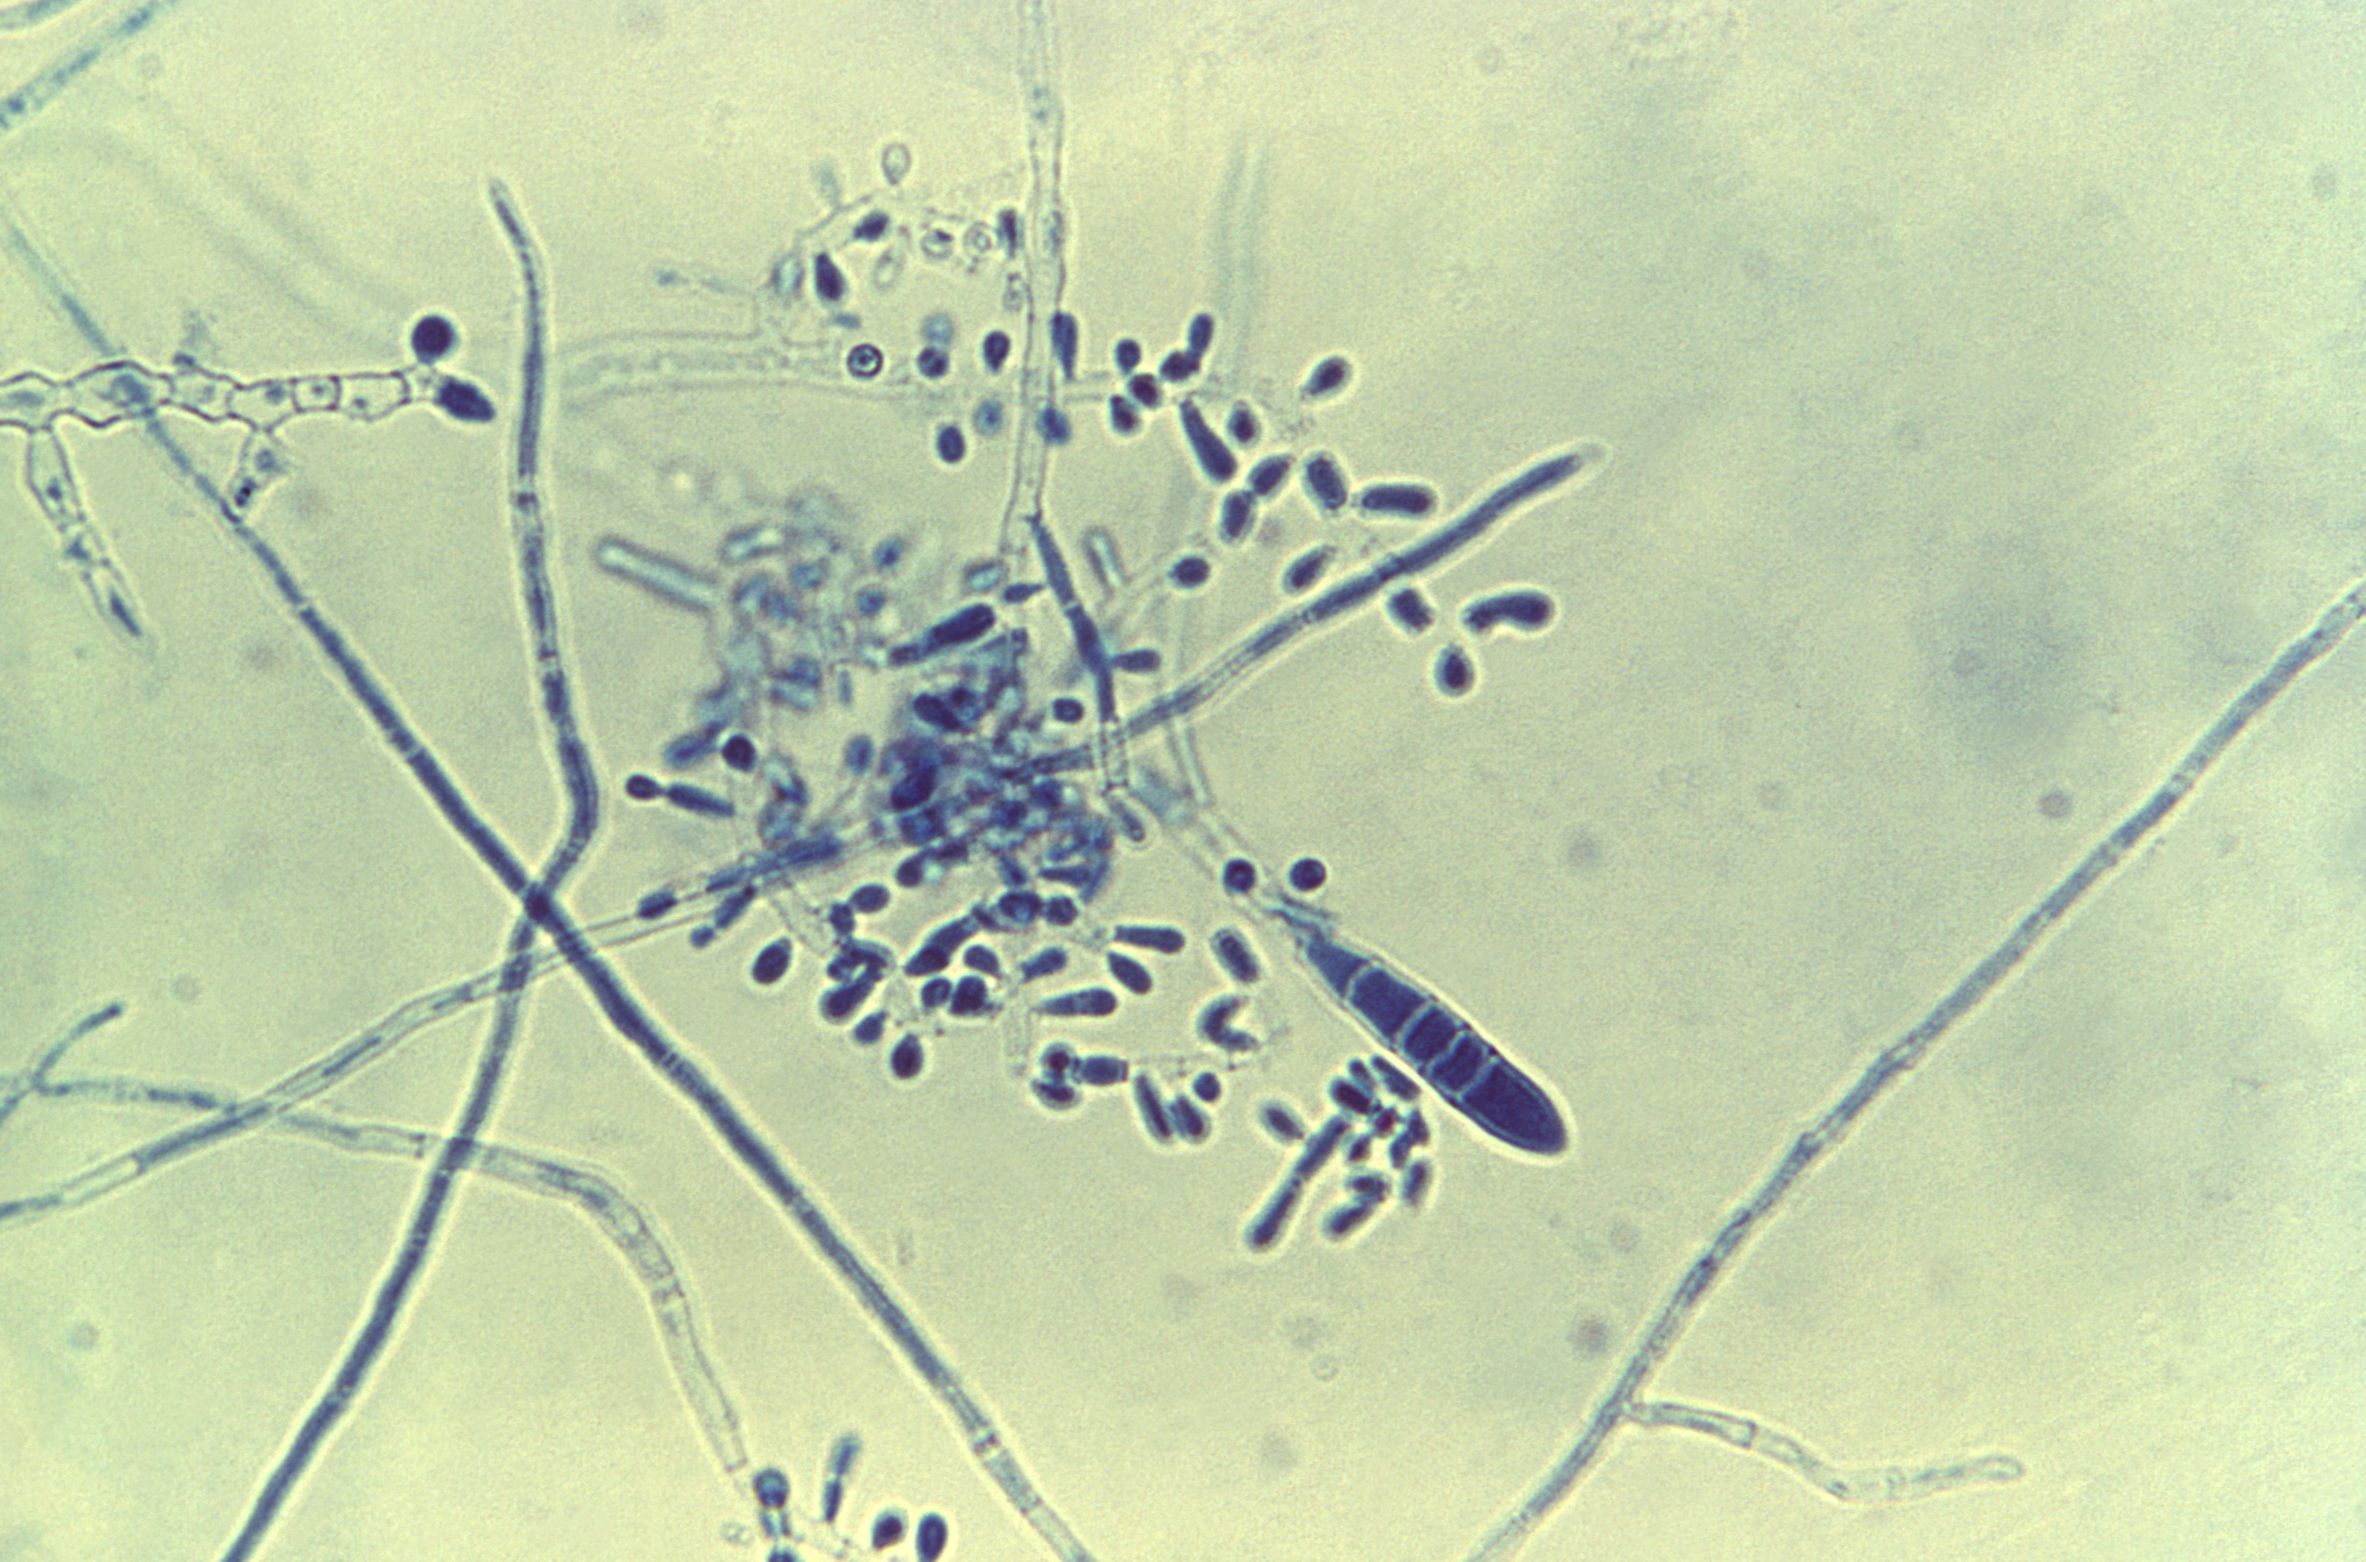 fungus on feet microscopic